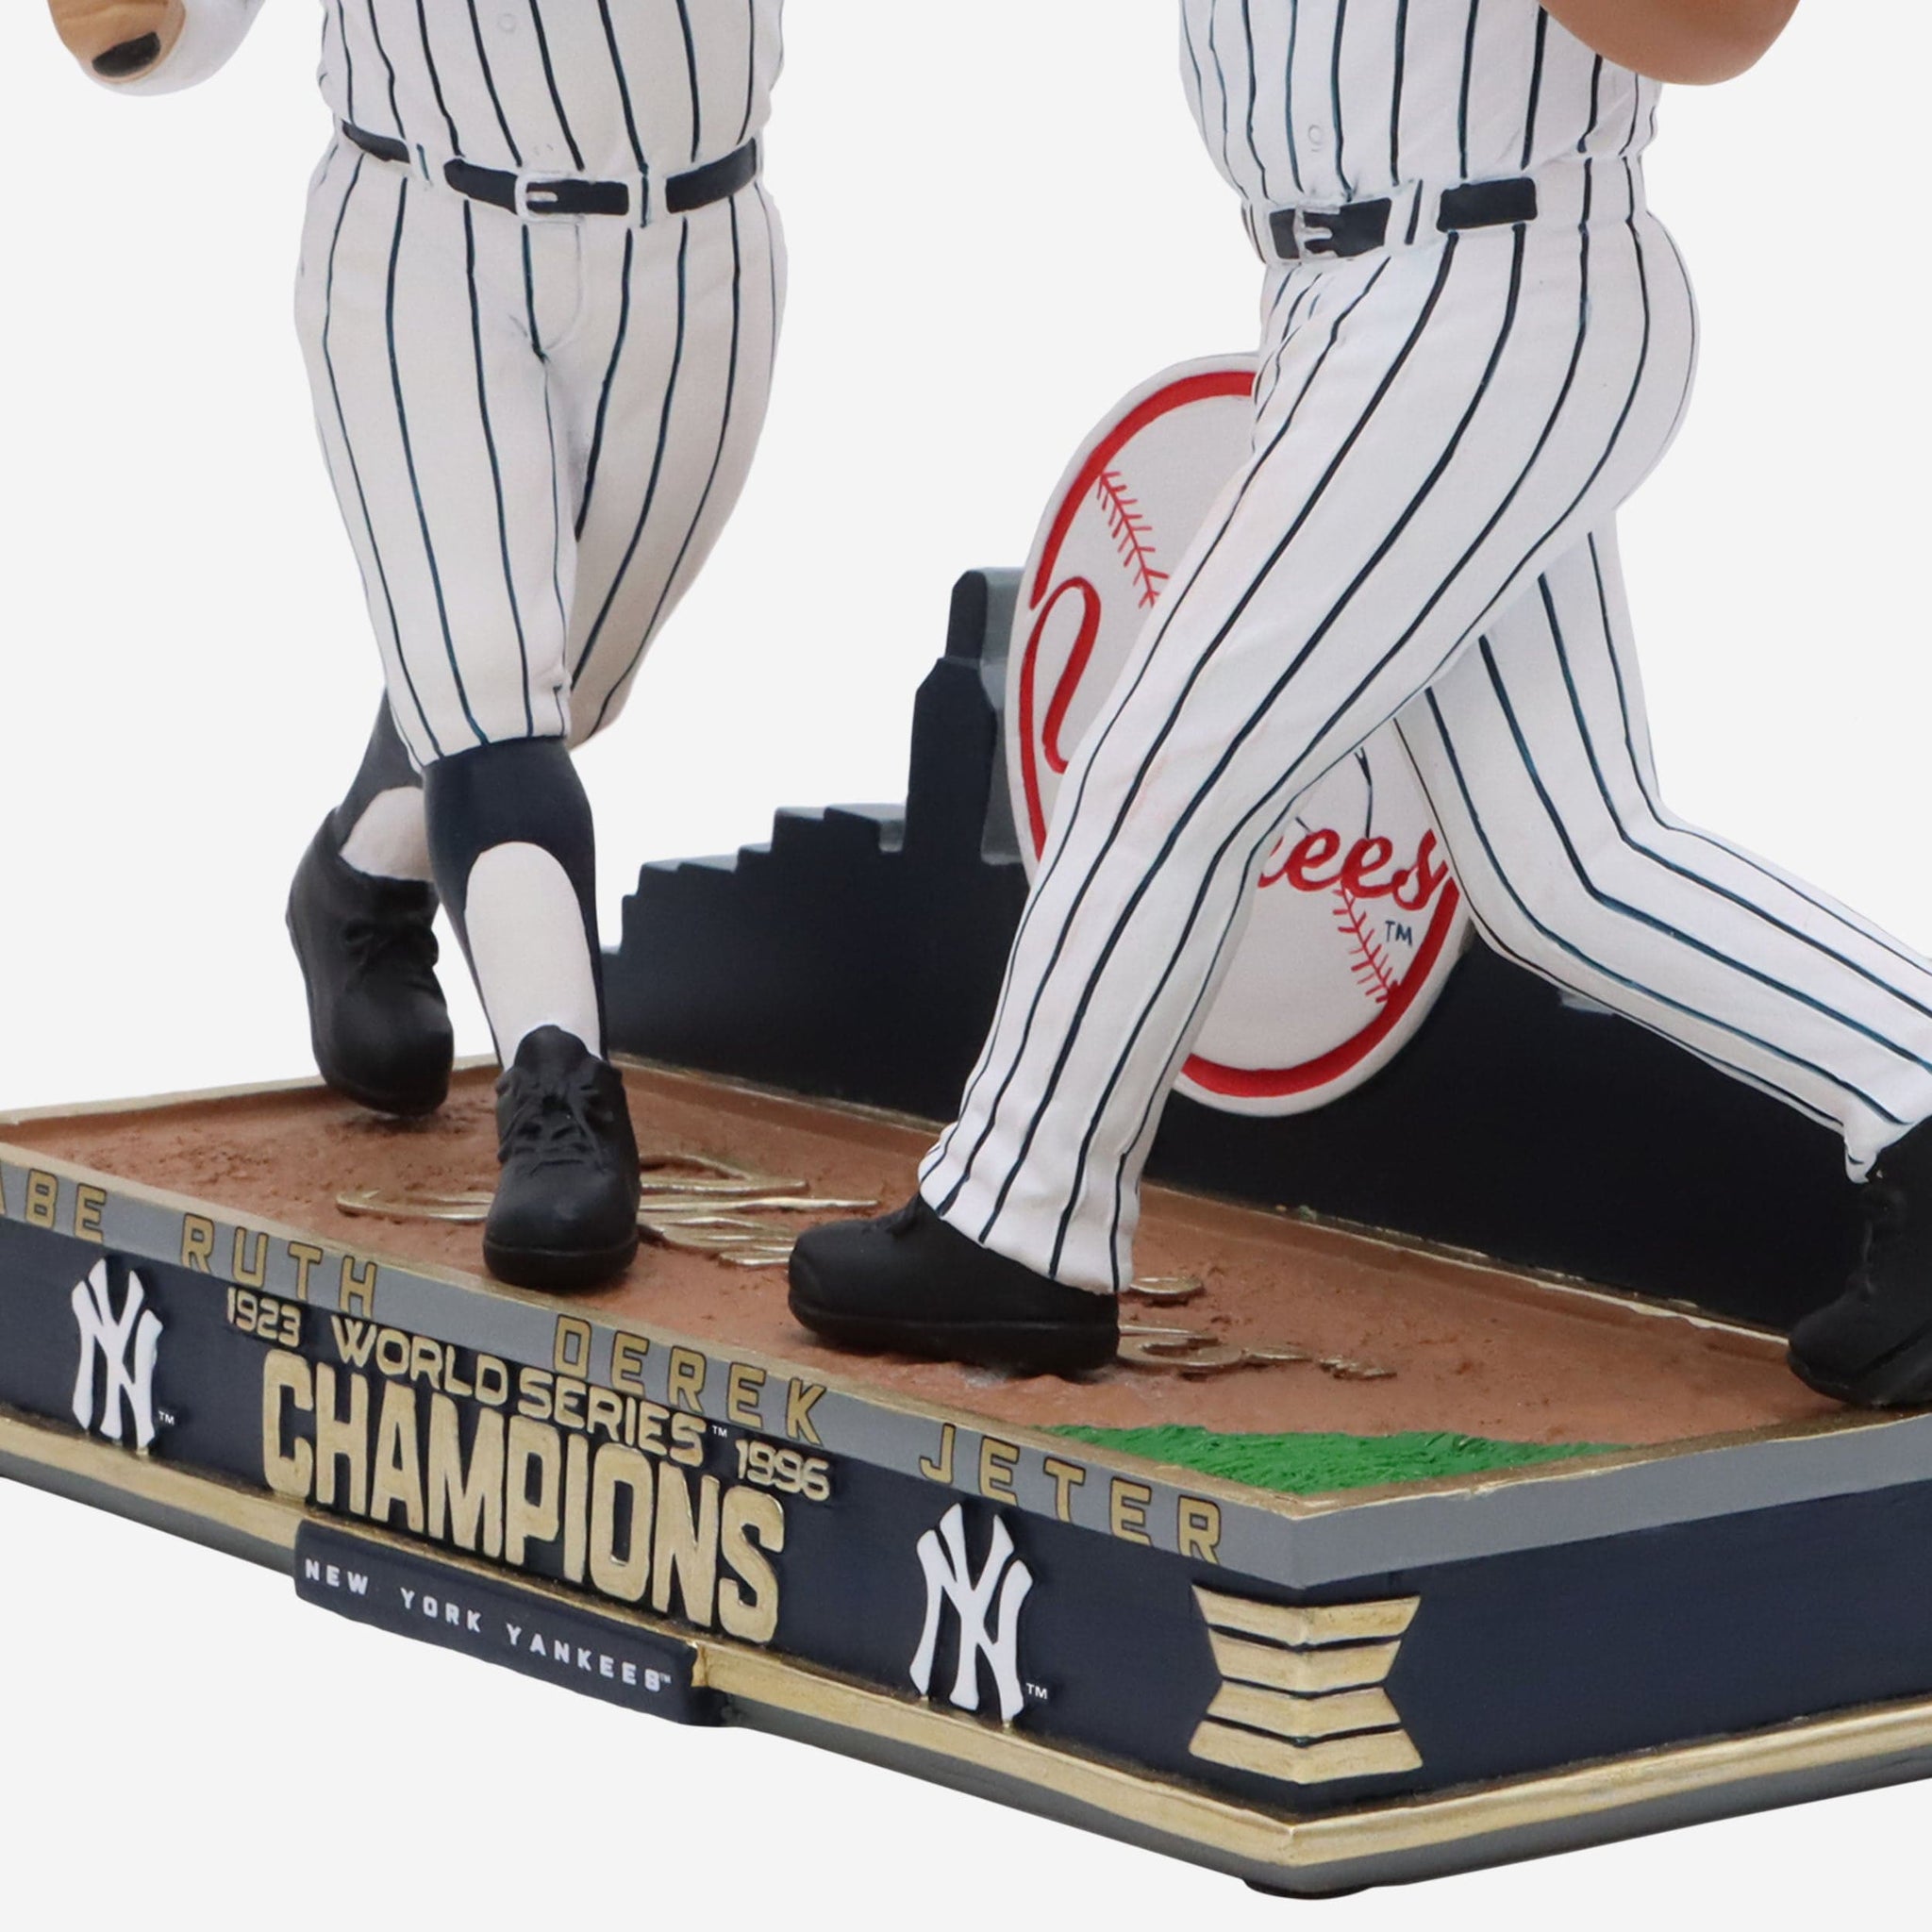 DEREK JETER New York Yankees Bobble Head 27X World Series Champs Trophy  Edition*